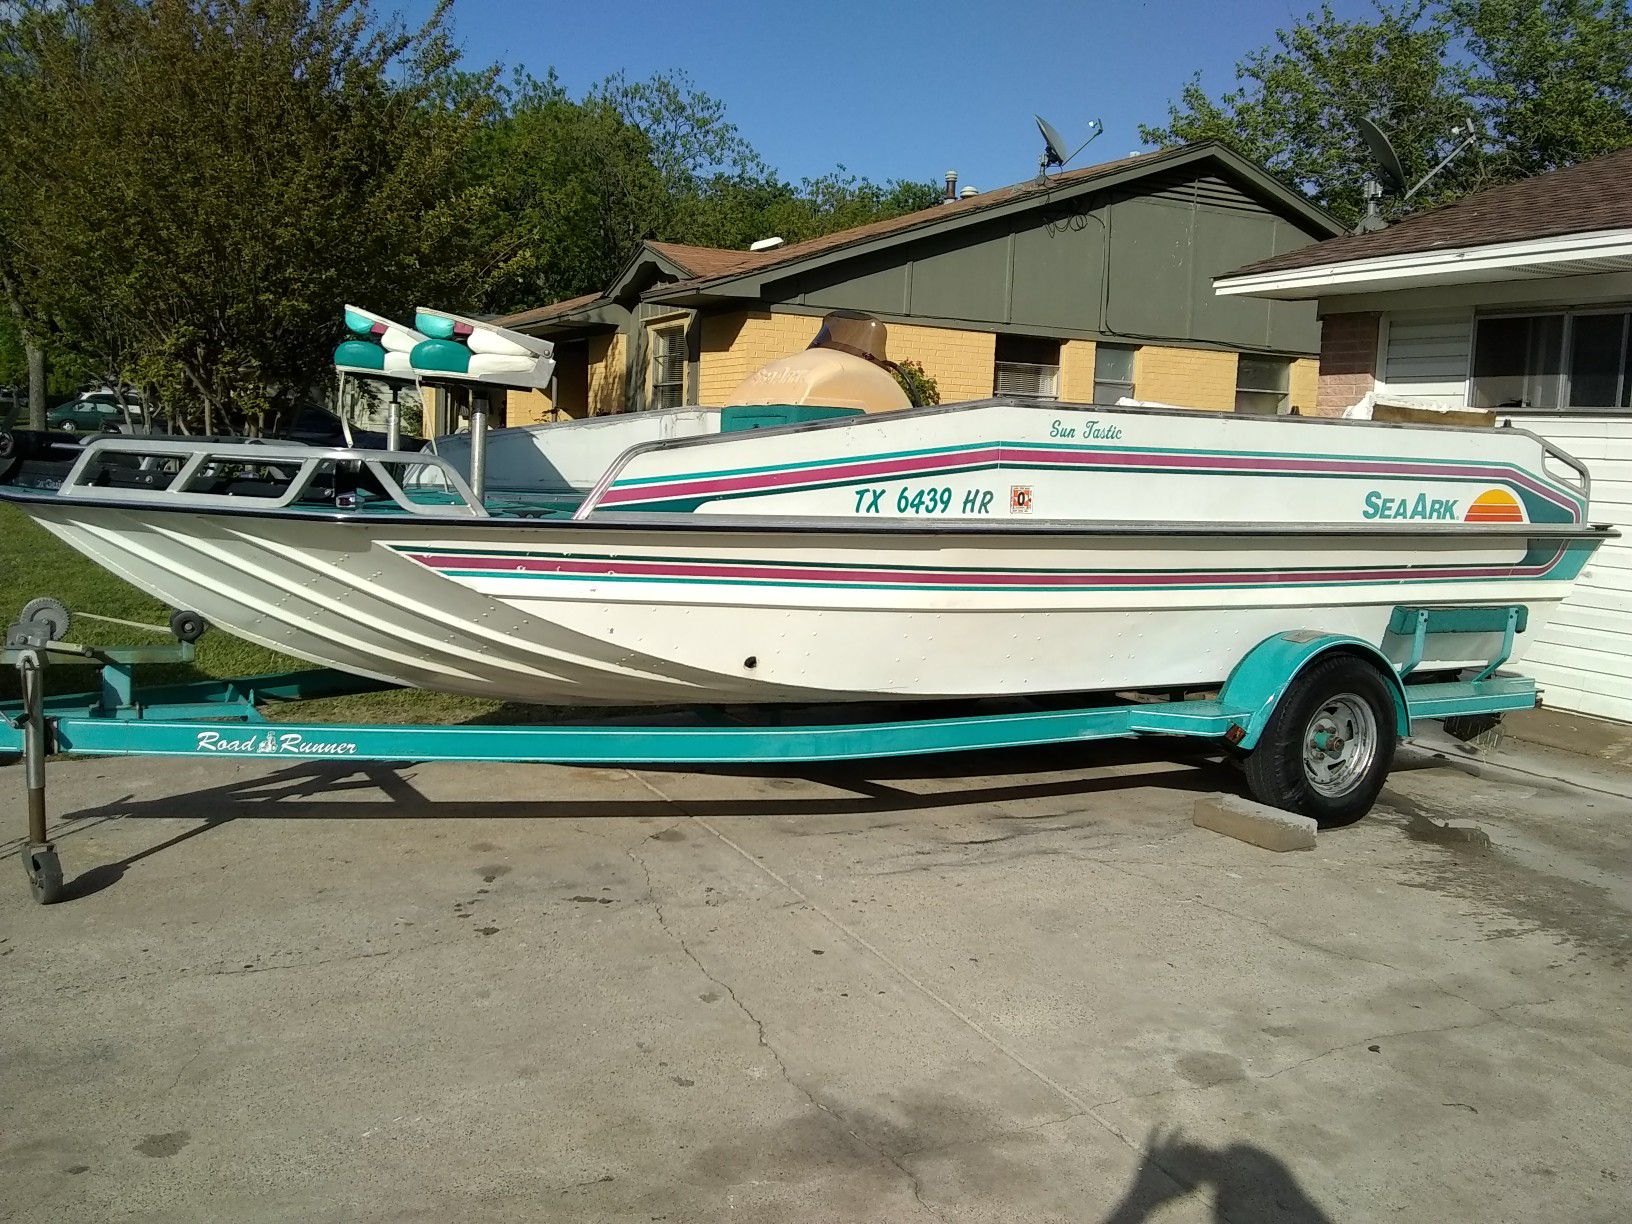 97 seaark for Sale in Dallas, TX - OfferUp